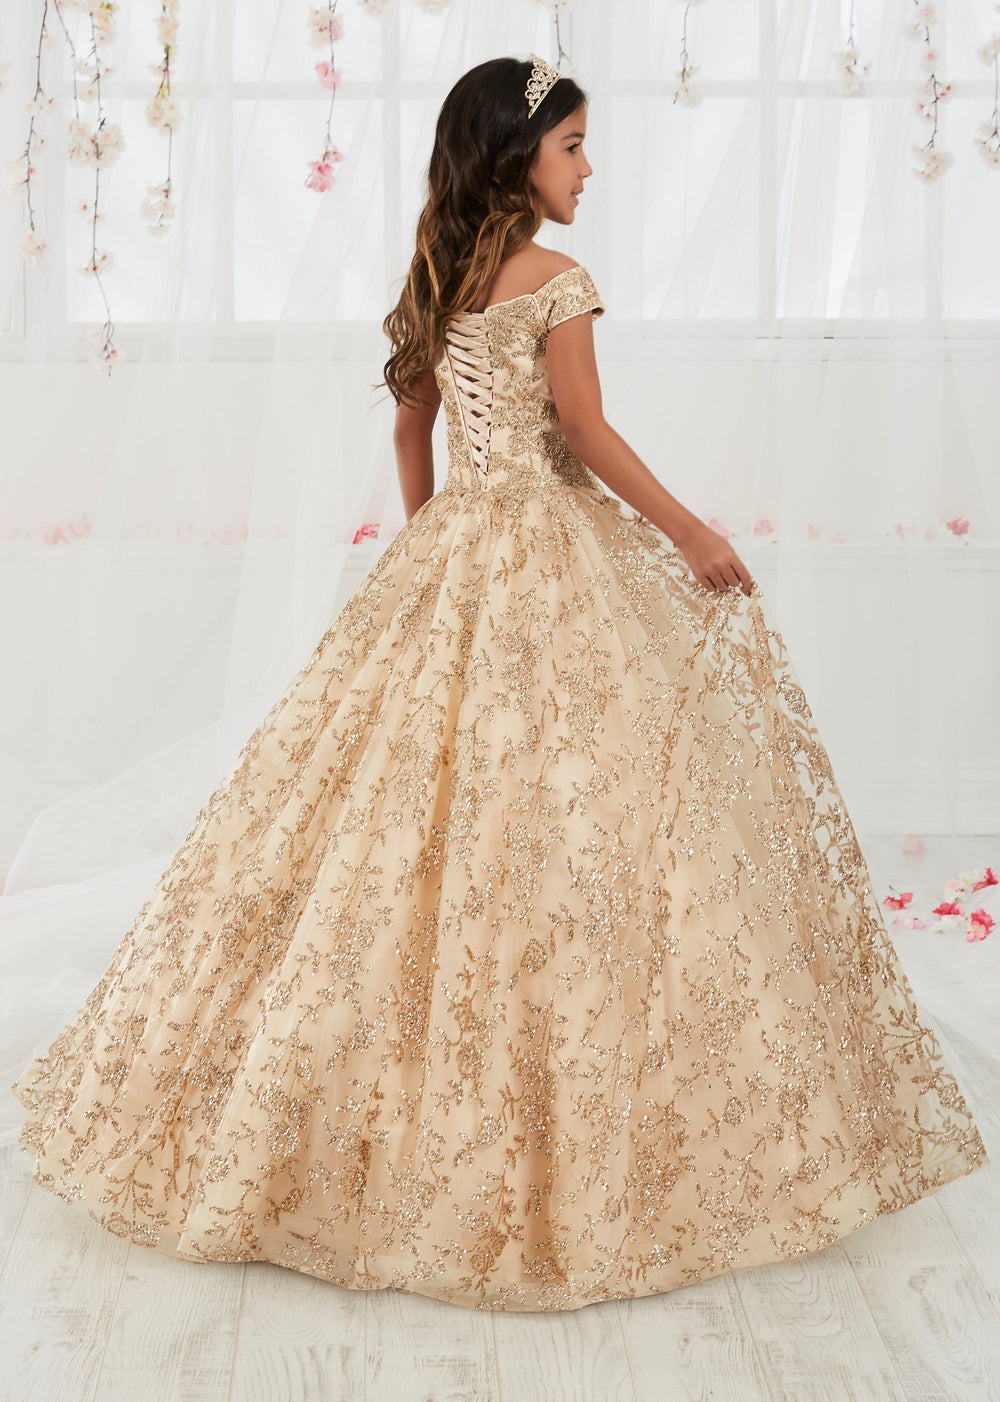 Floral Applique Girls Long Off the Shoulder Dress by Tiffany Princess 13557-Girls Formal Dresses-ABC Fashion